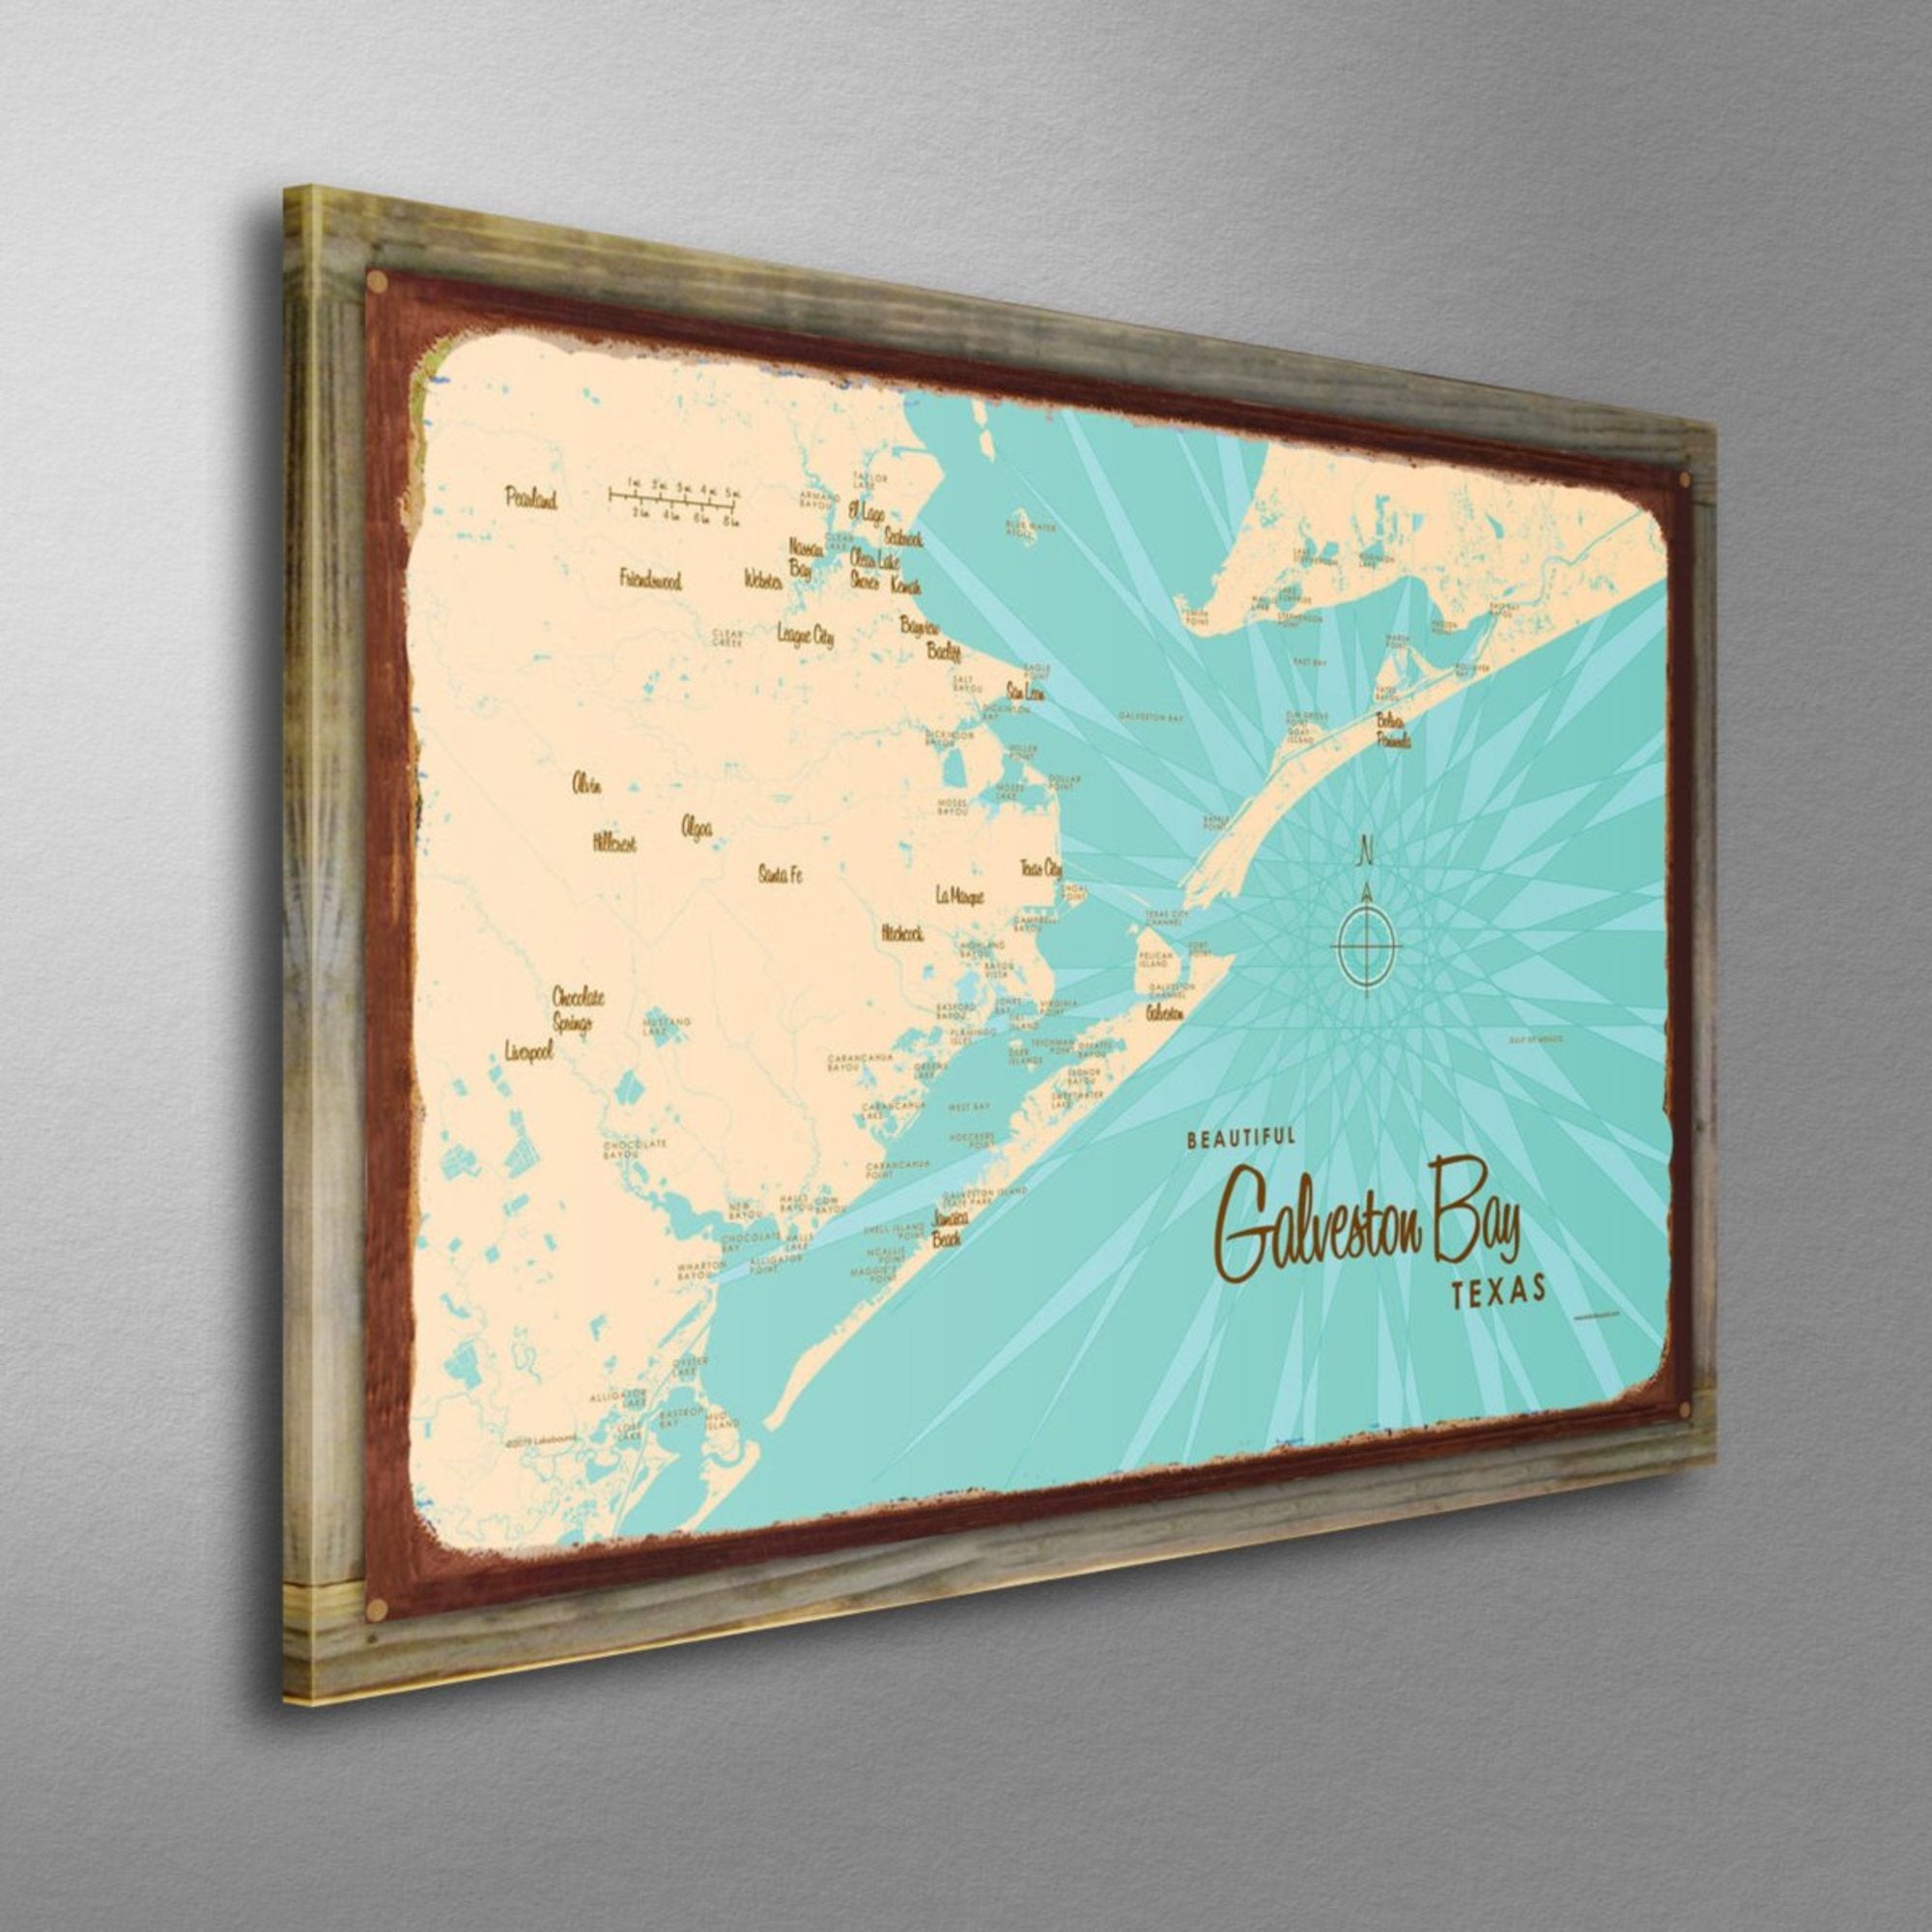 Galveston Bay Texas, Wood-Mounted Rustic Metal Sign Map Art